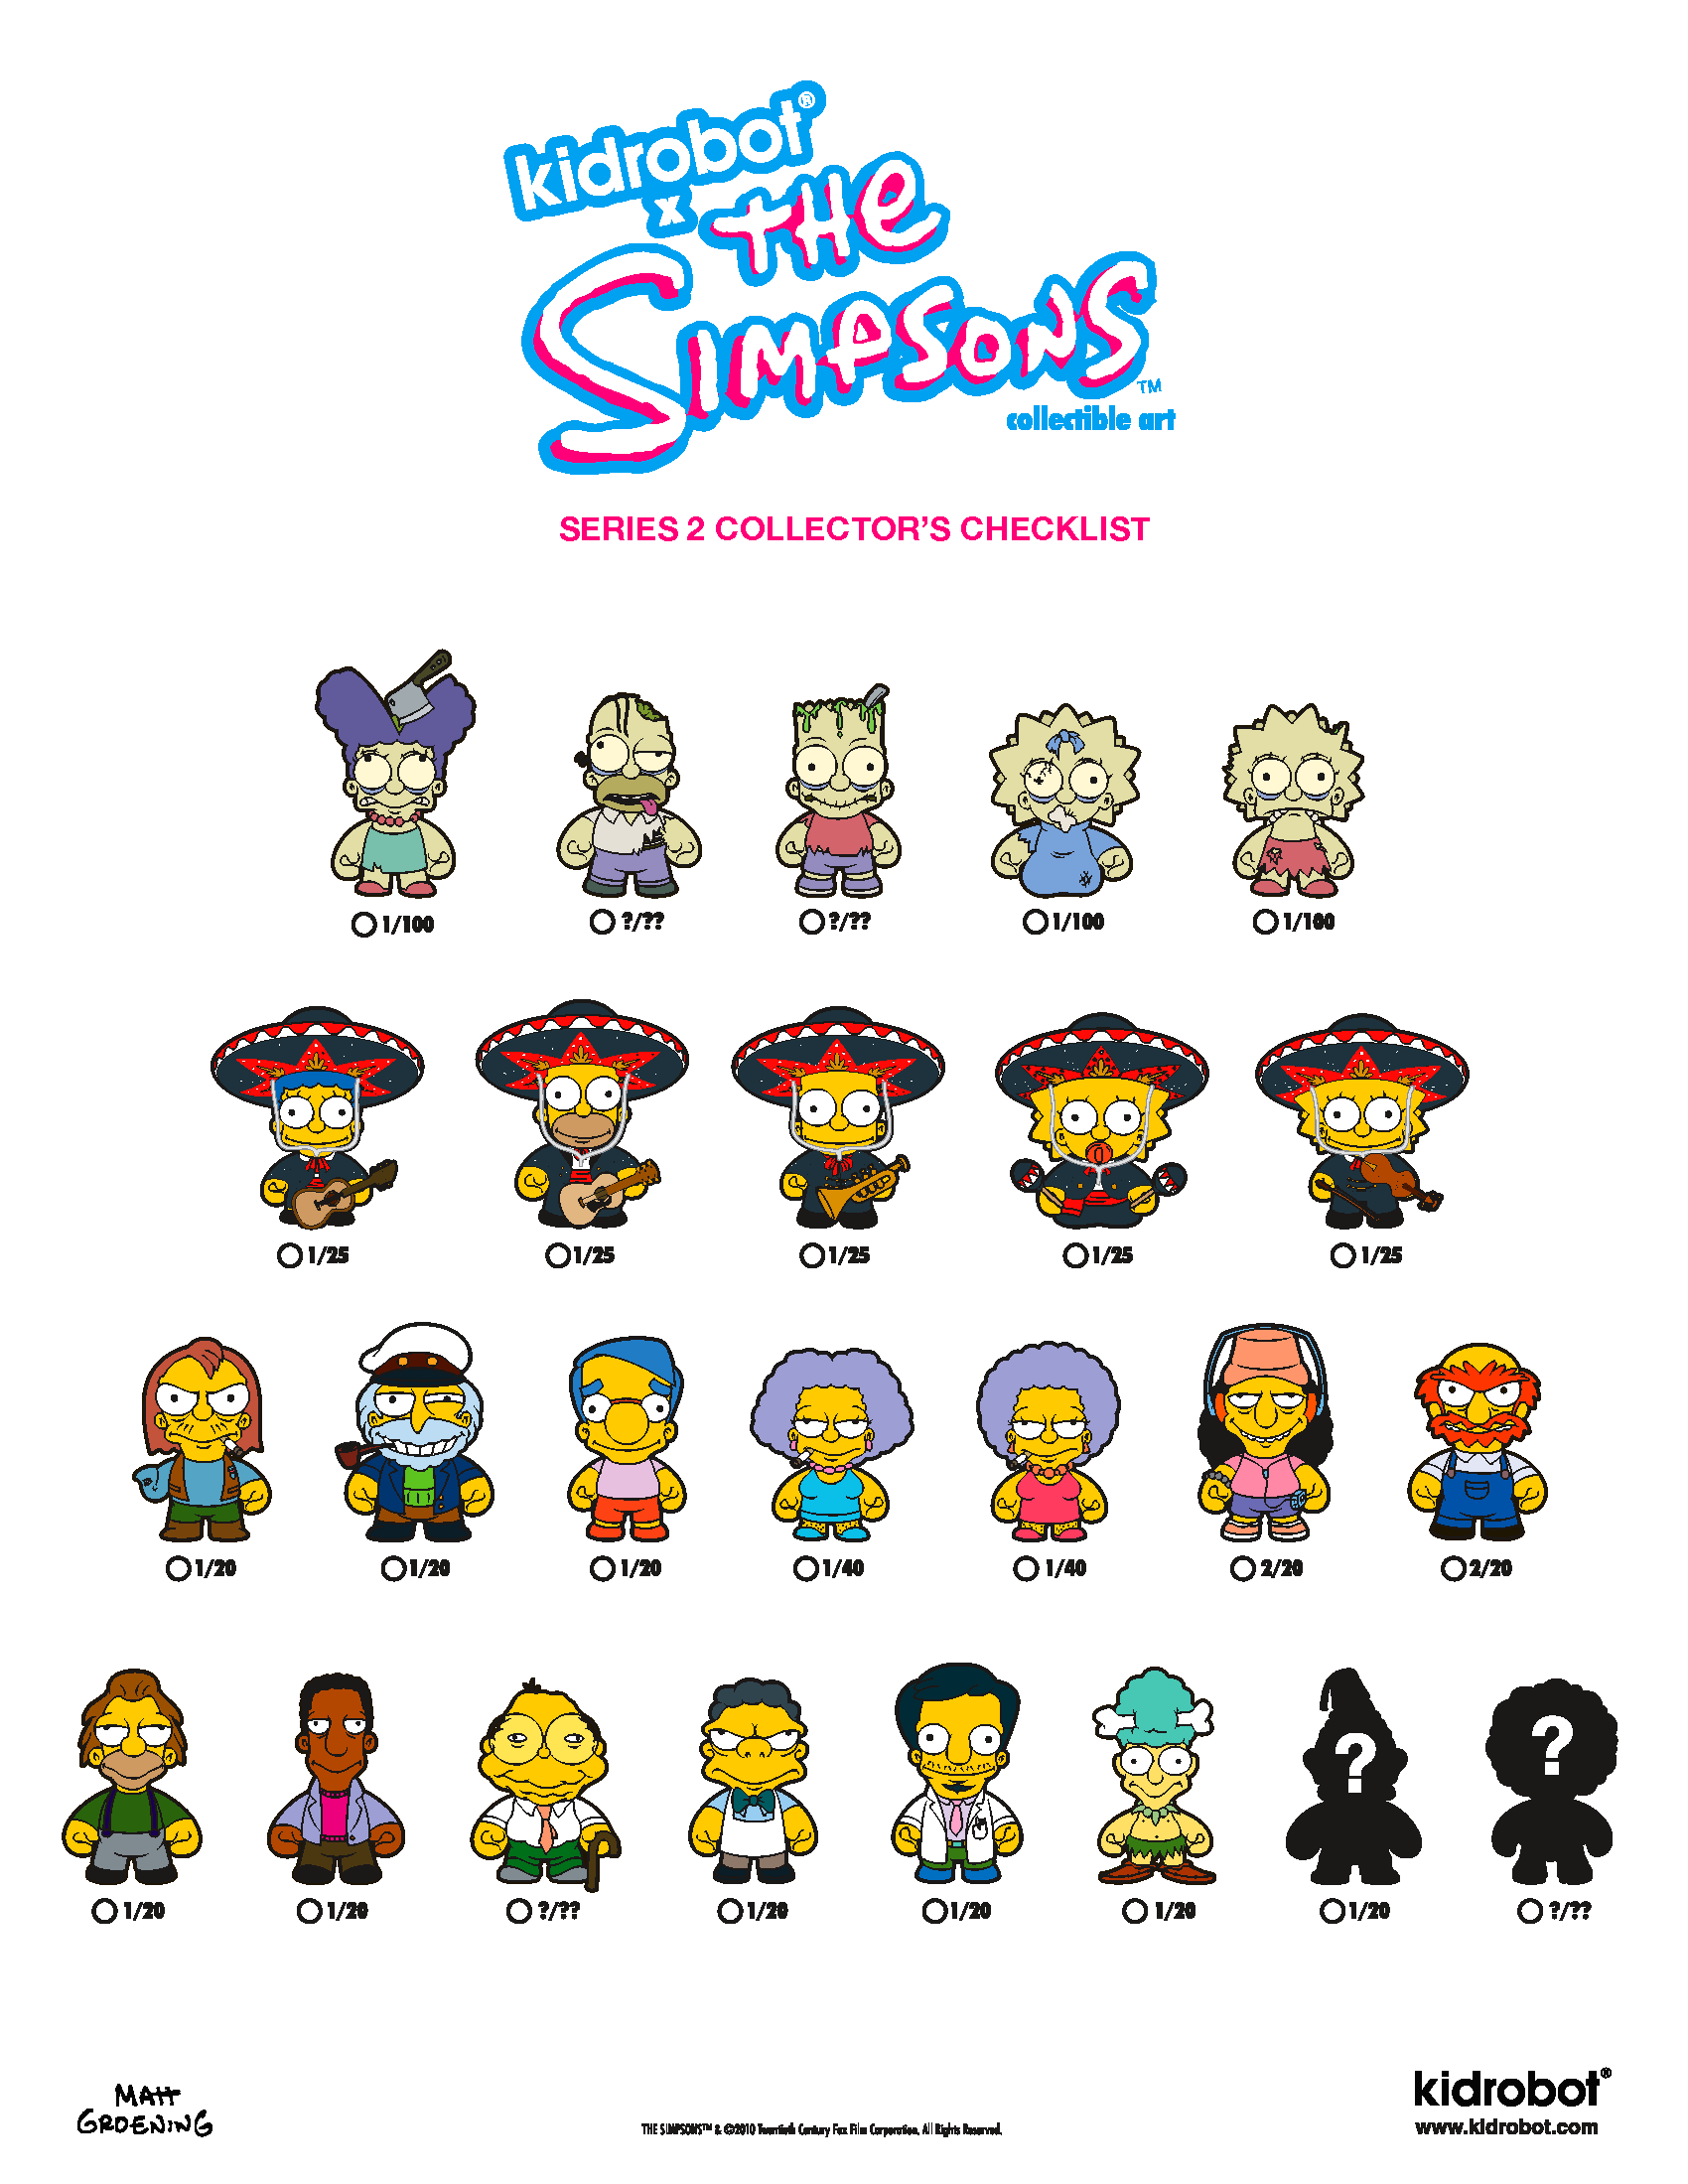 NECA Kidrobot Simpsons 3" Figure Surprise Box Series 2 Kawaii Gifts 883975081638